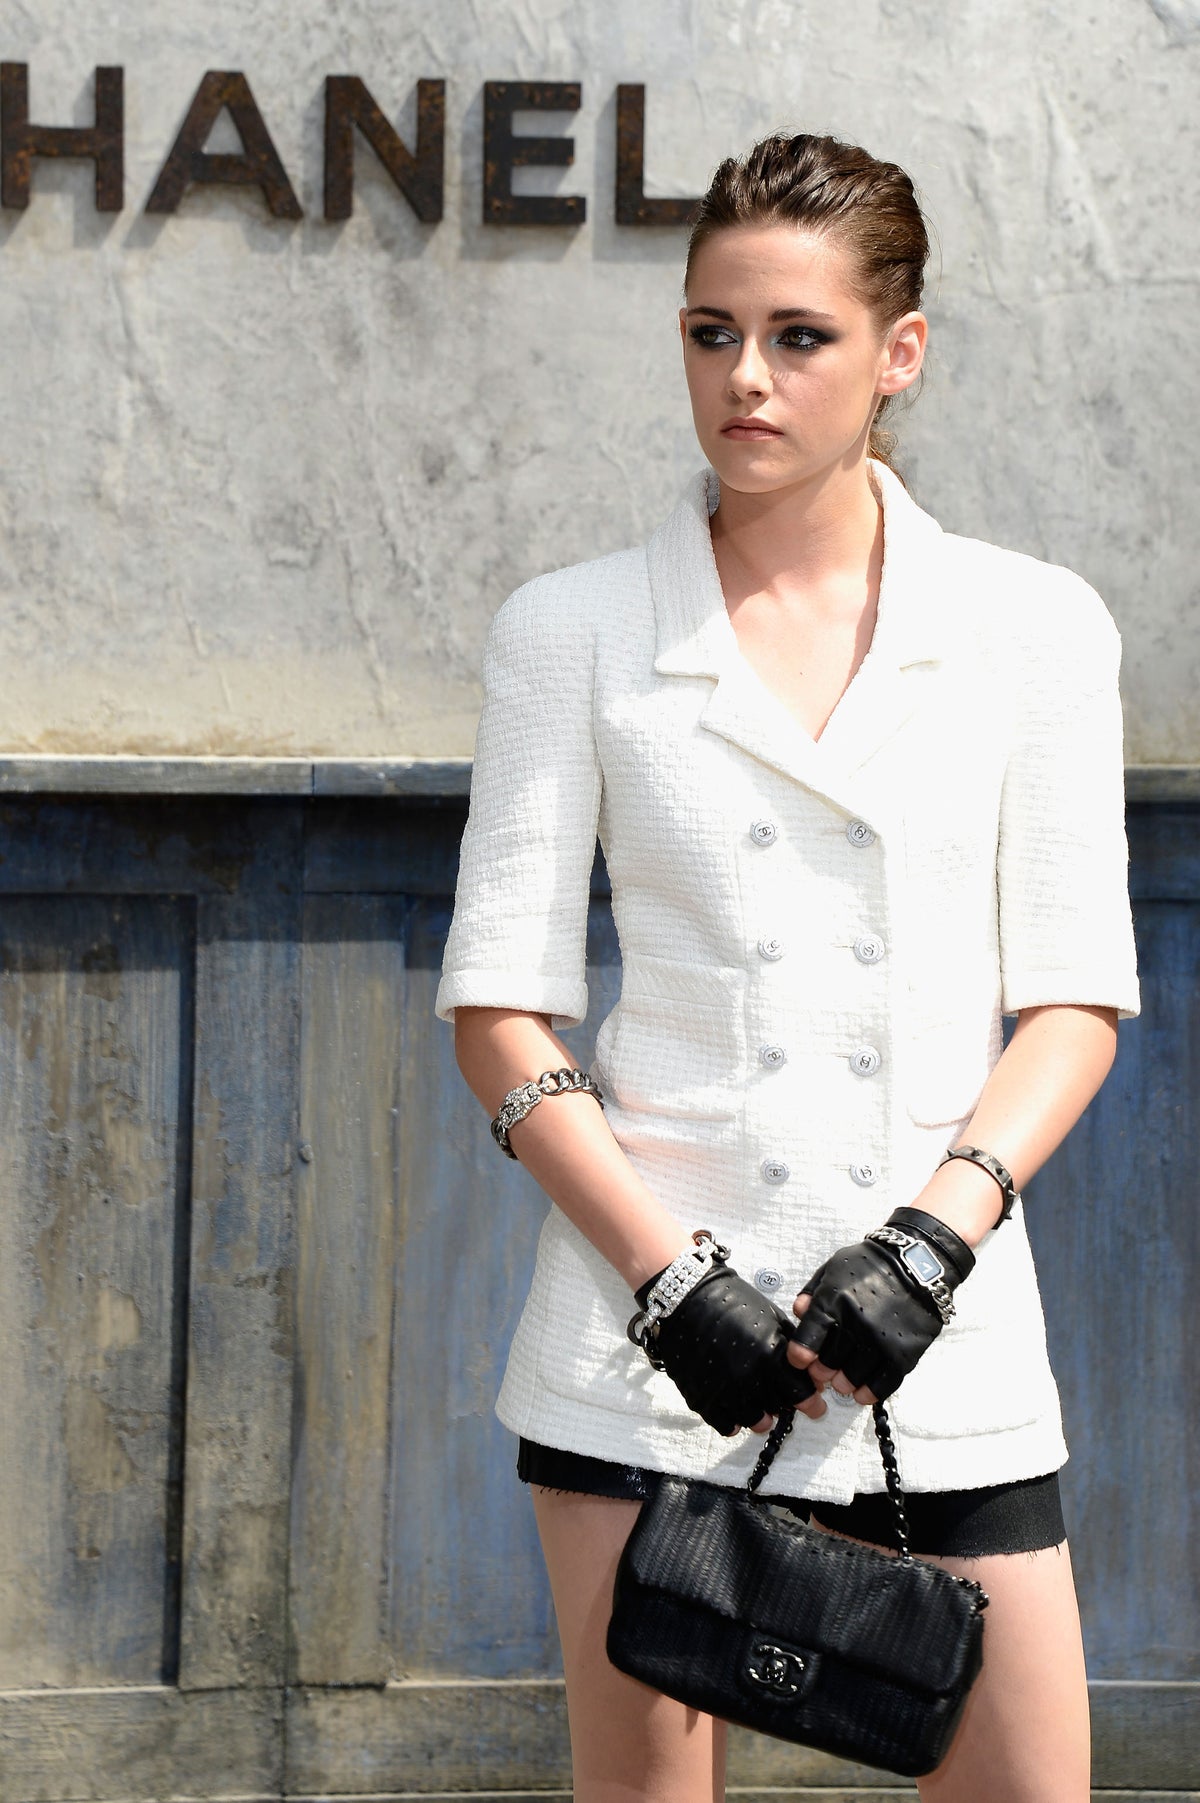 Kristen Stewart named the new face of Chanel